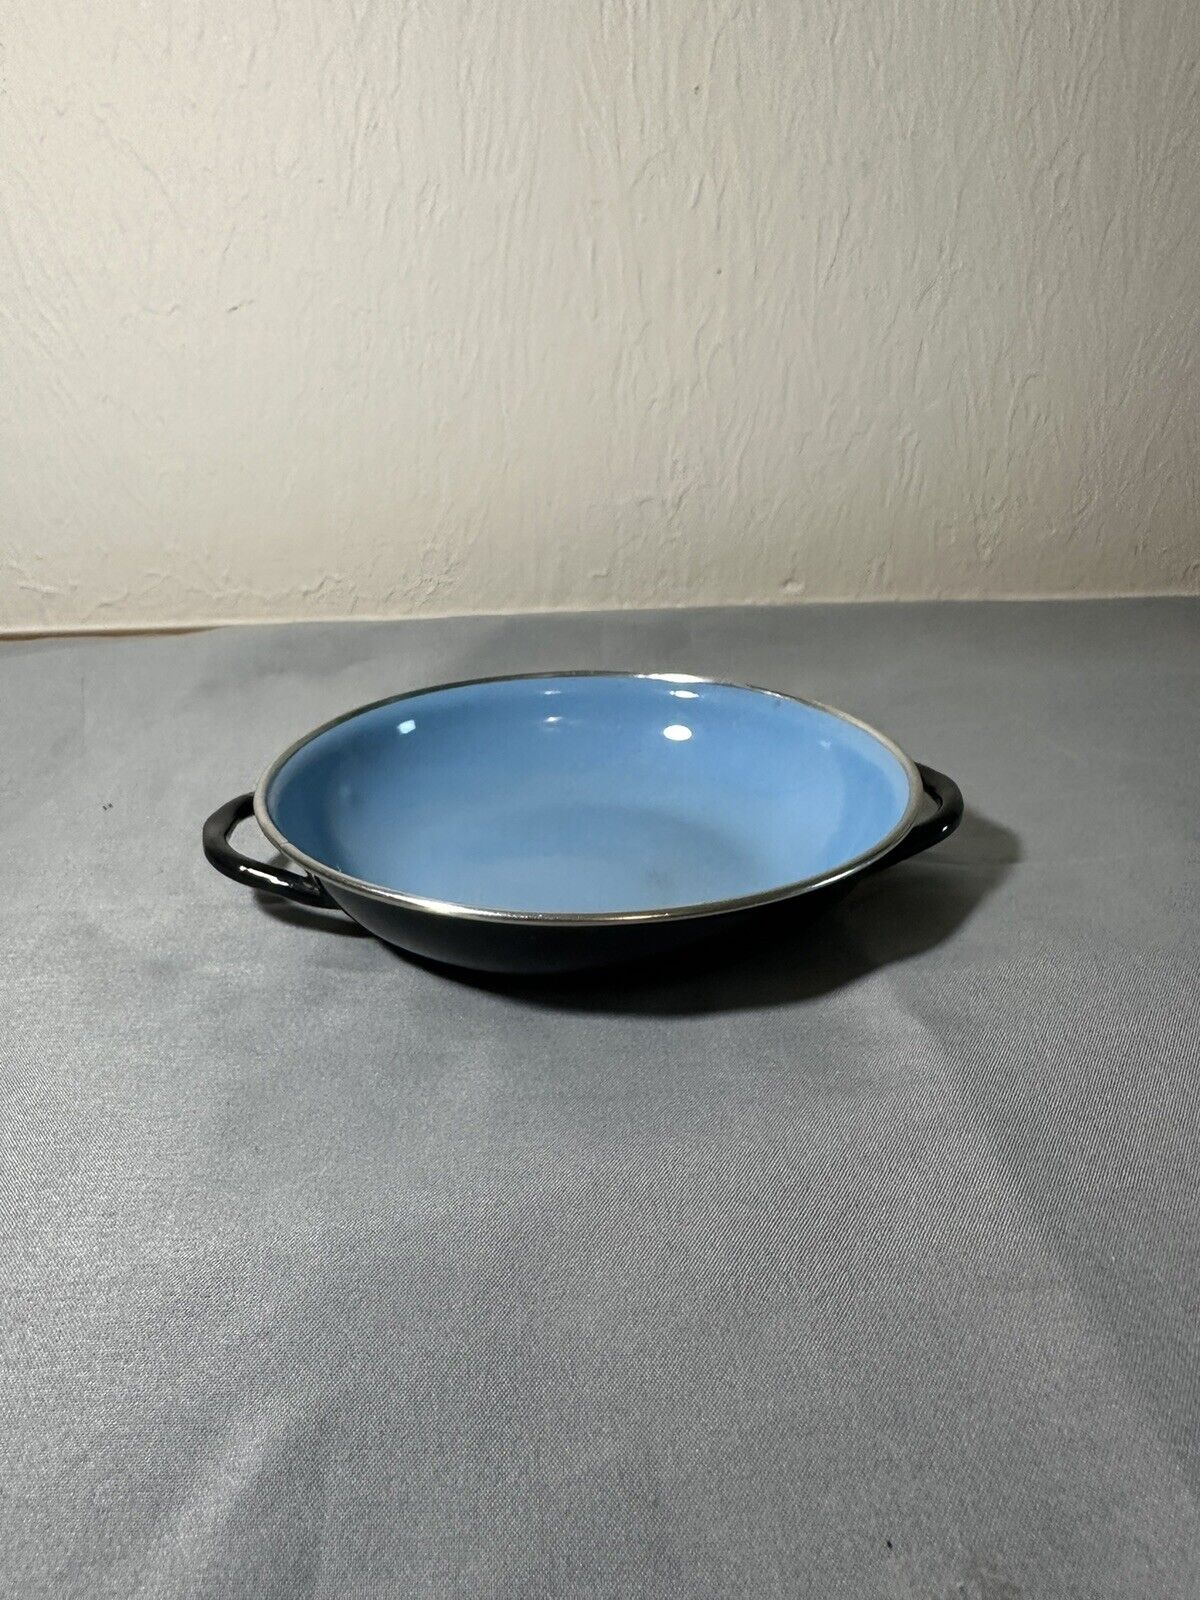 Vintage Yugoslavian Enamel Single Sauté Pan With Handles, Blue/Black 6”